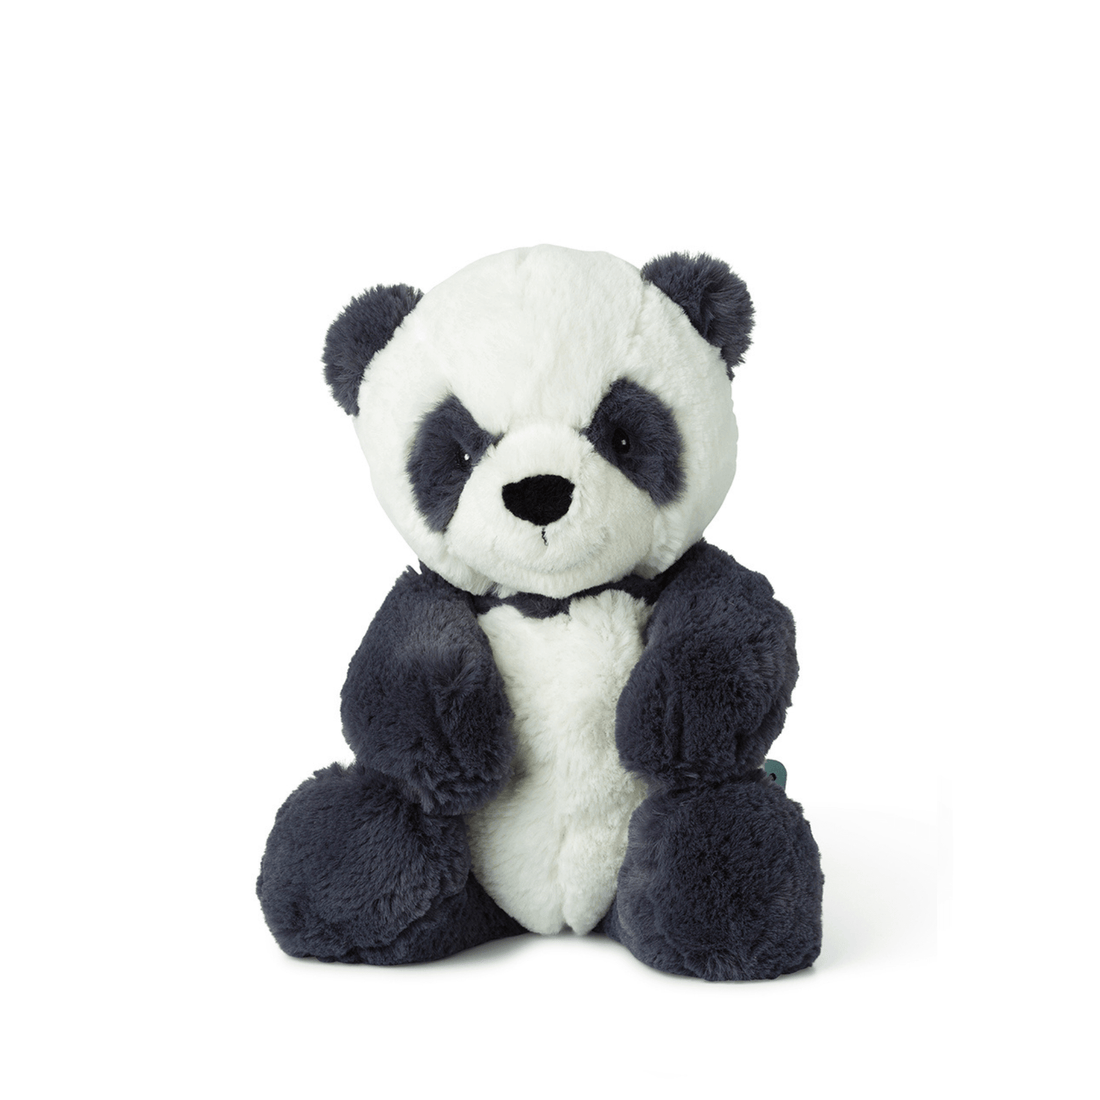 The little bear - Panda Panu